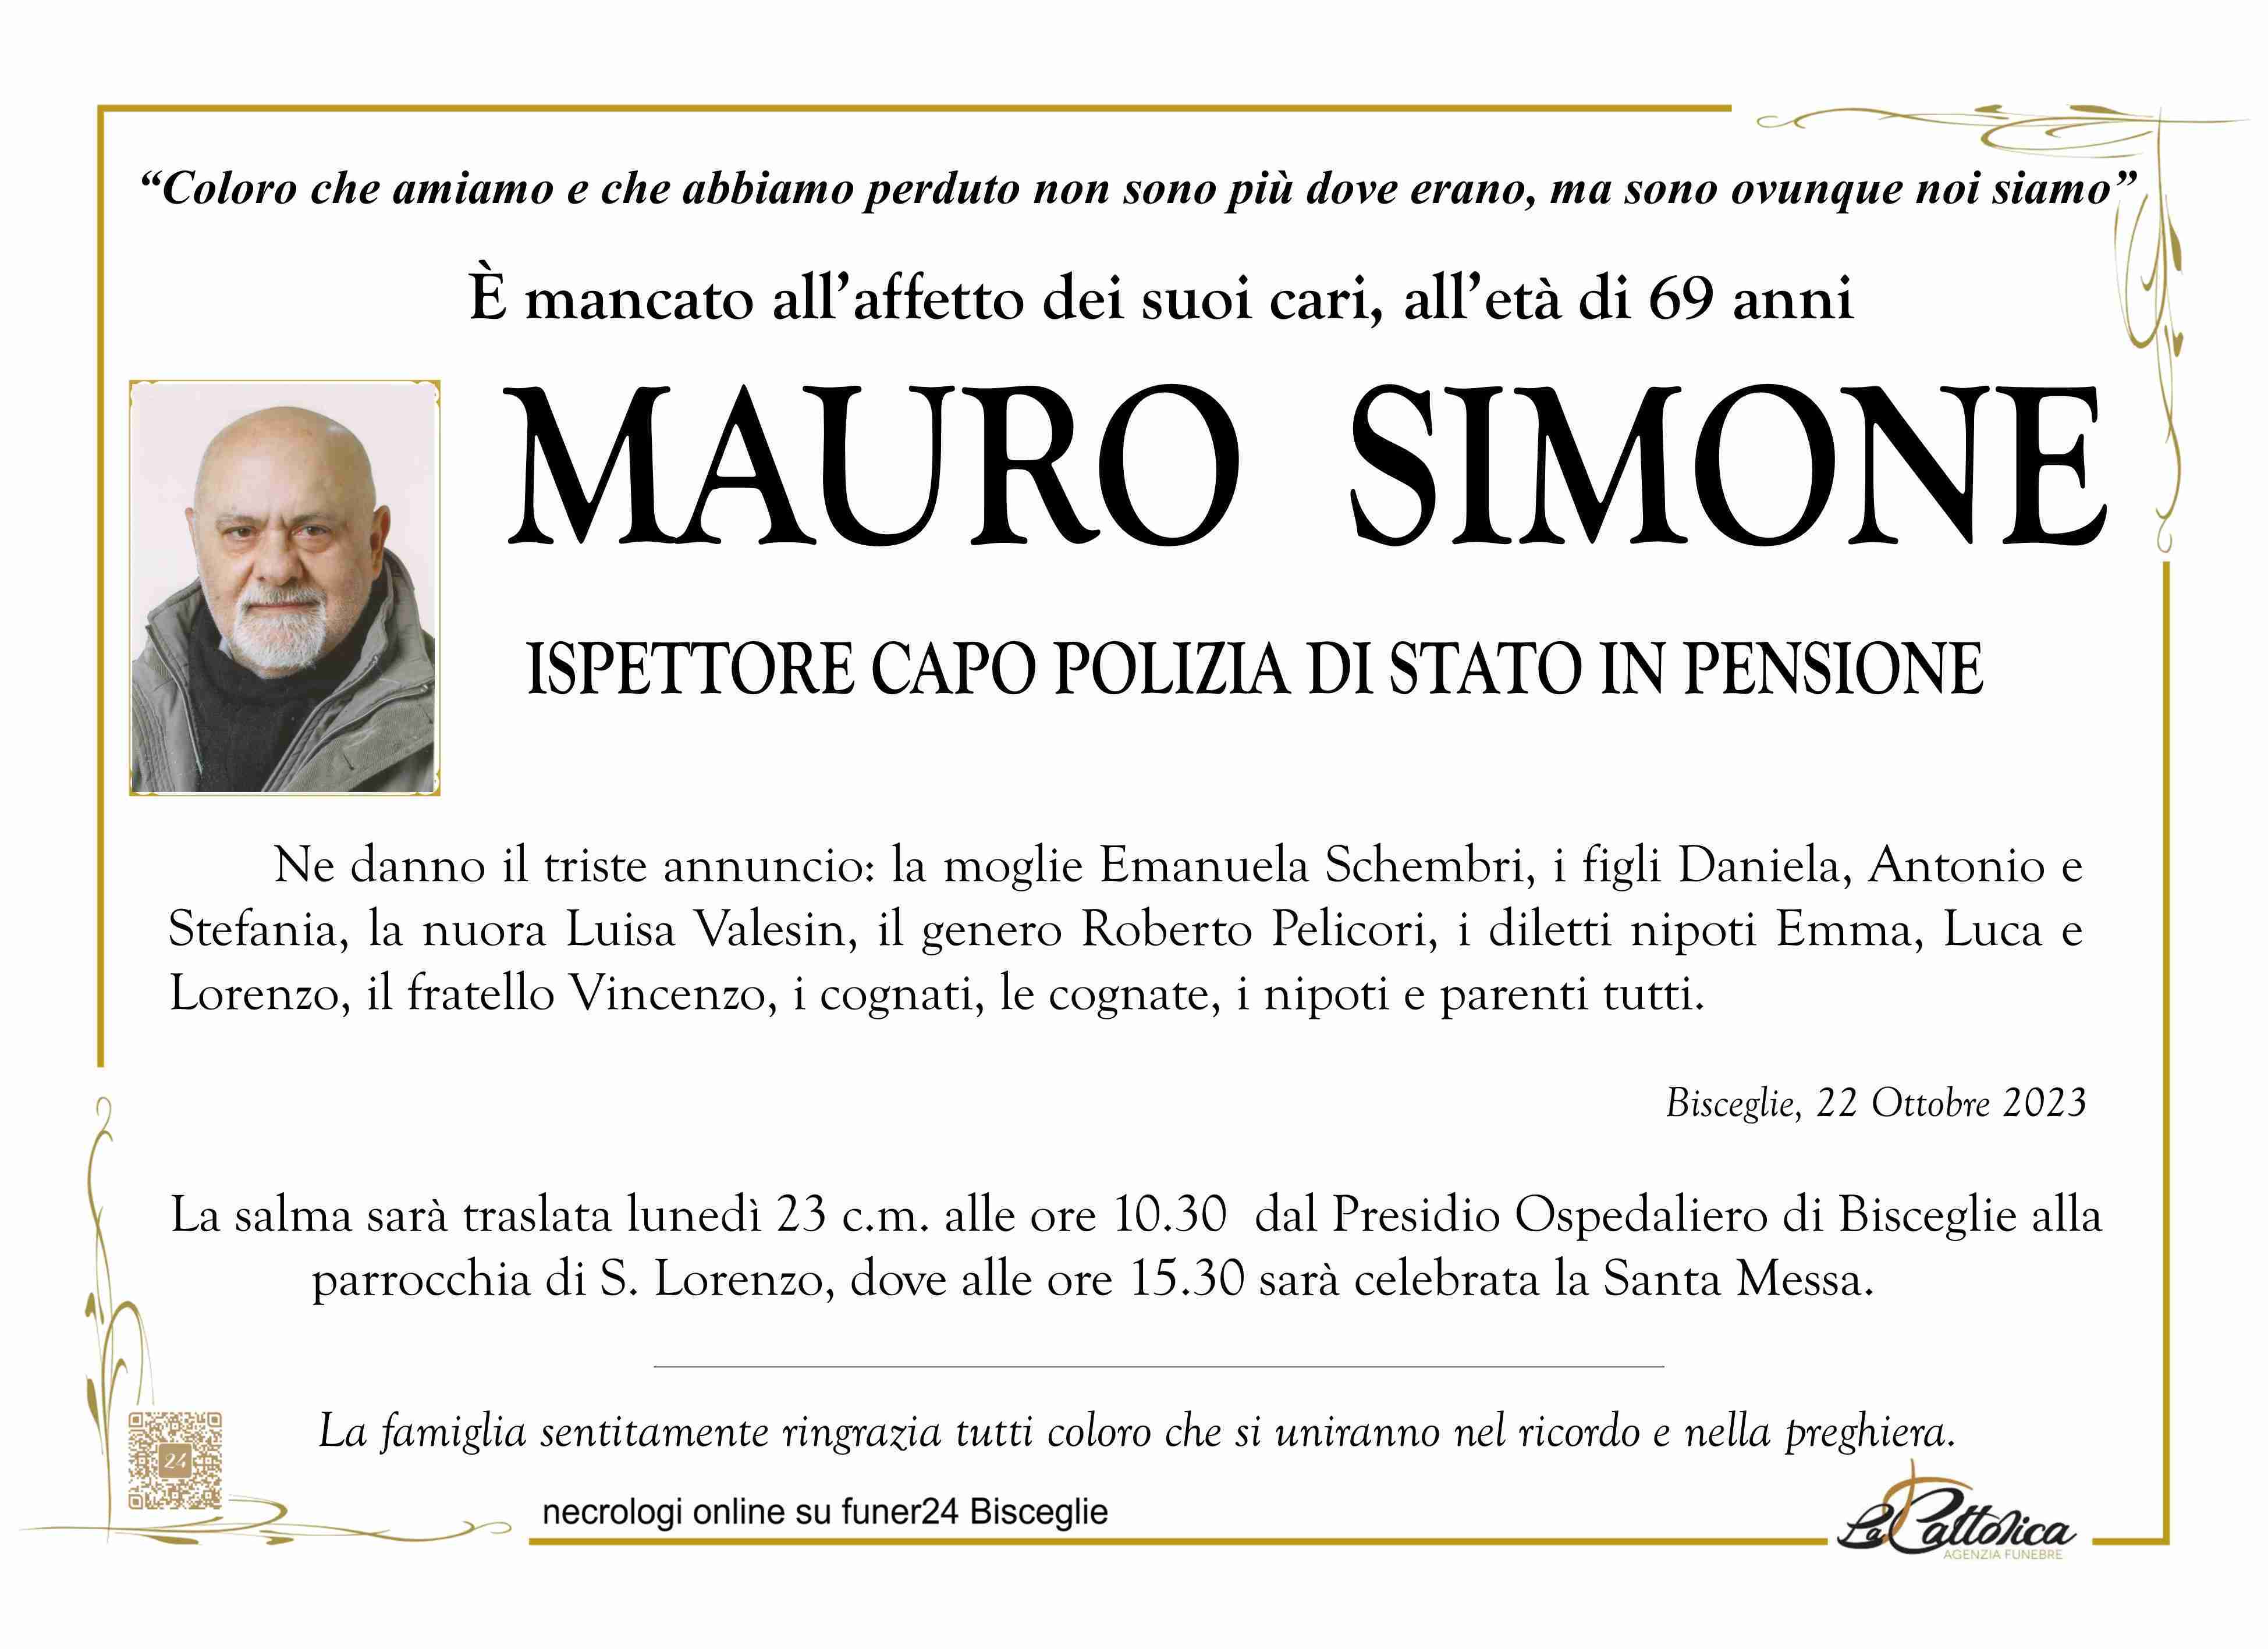 Mauro Simone